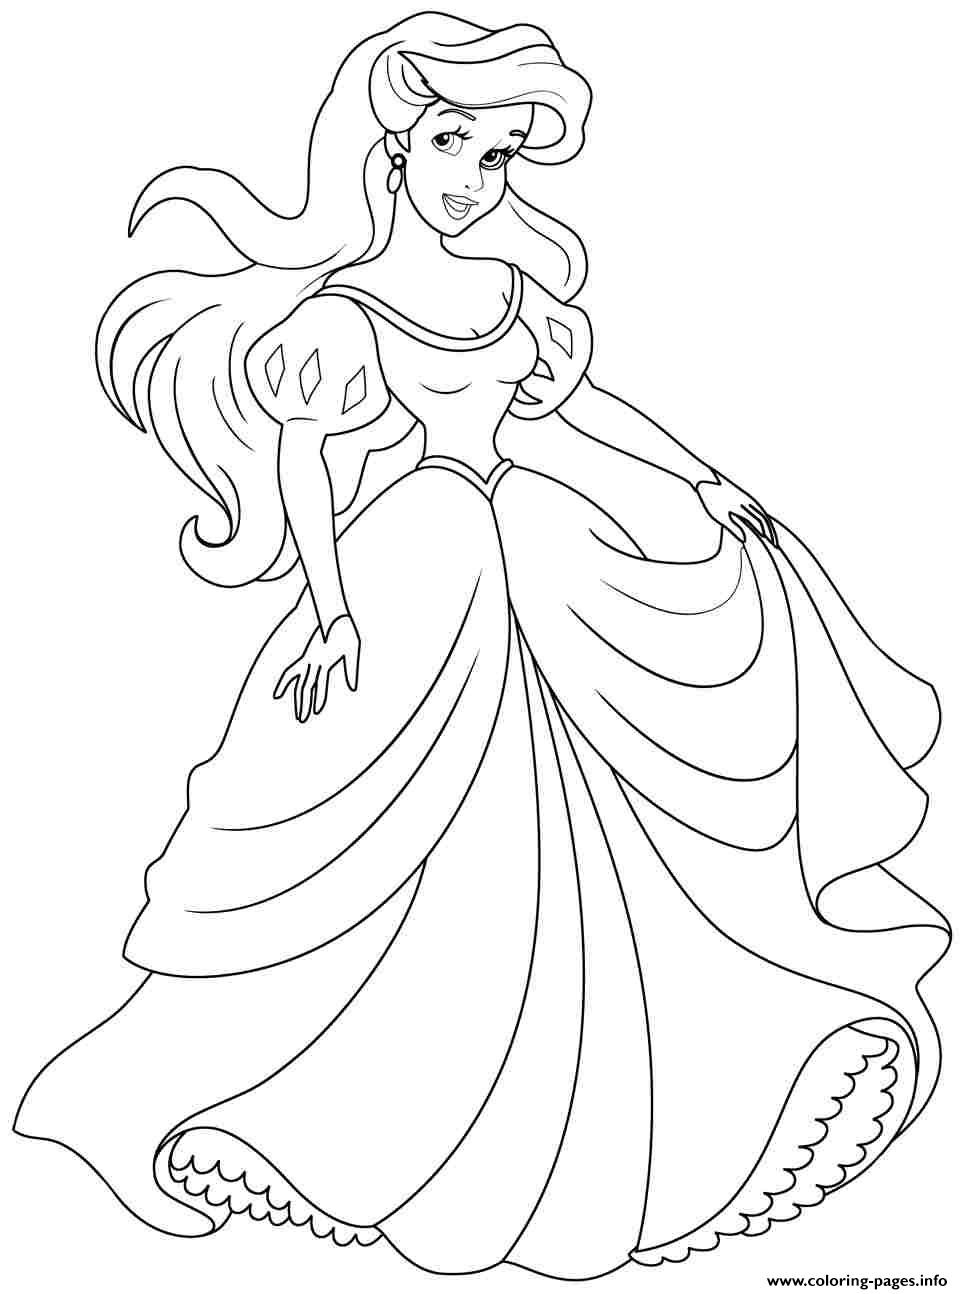 Princess Ariel Human coloring pages Print Download 508 prints